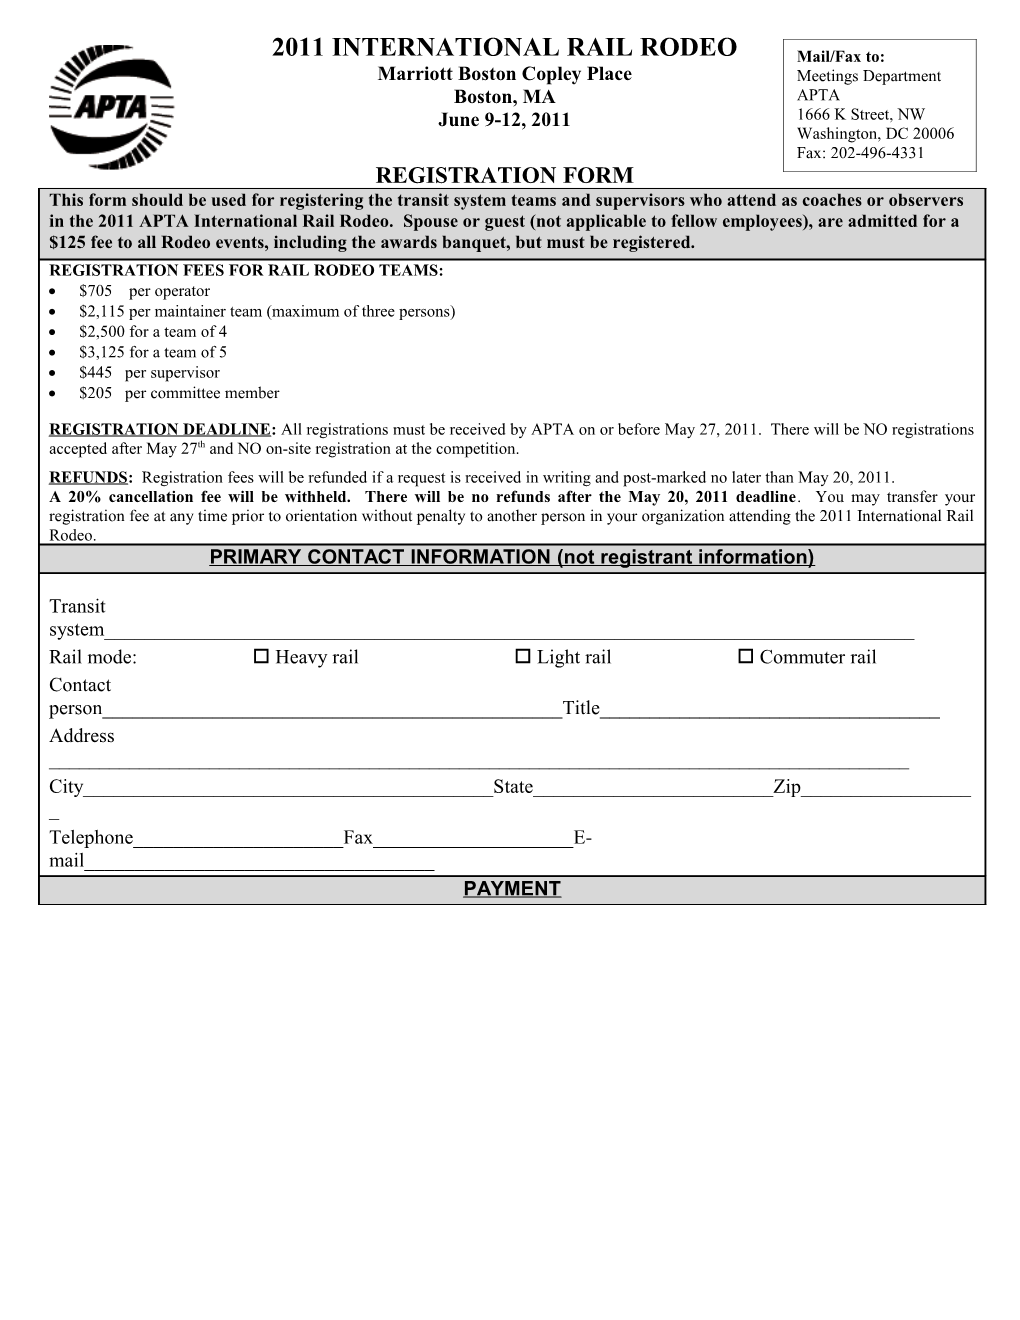 APTA Rail Rodeo Registration Form